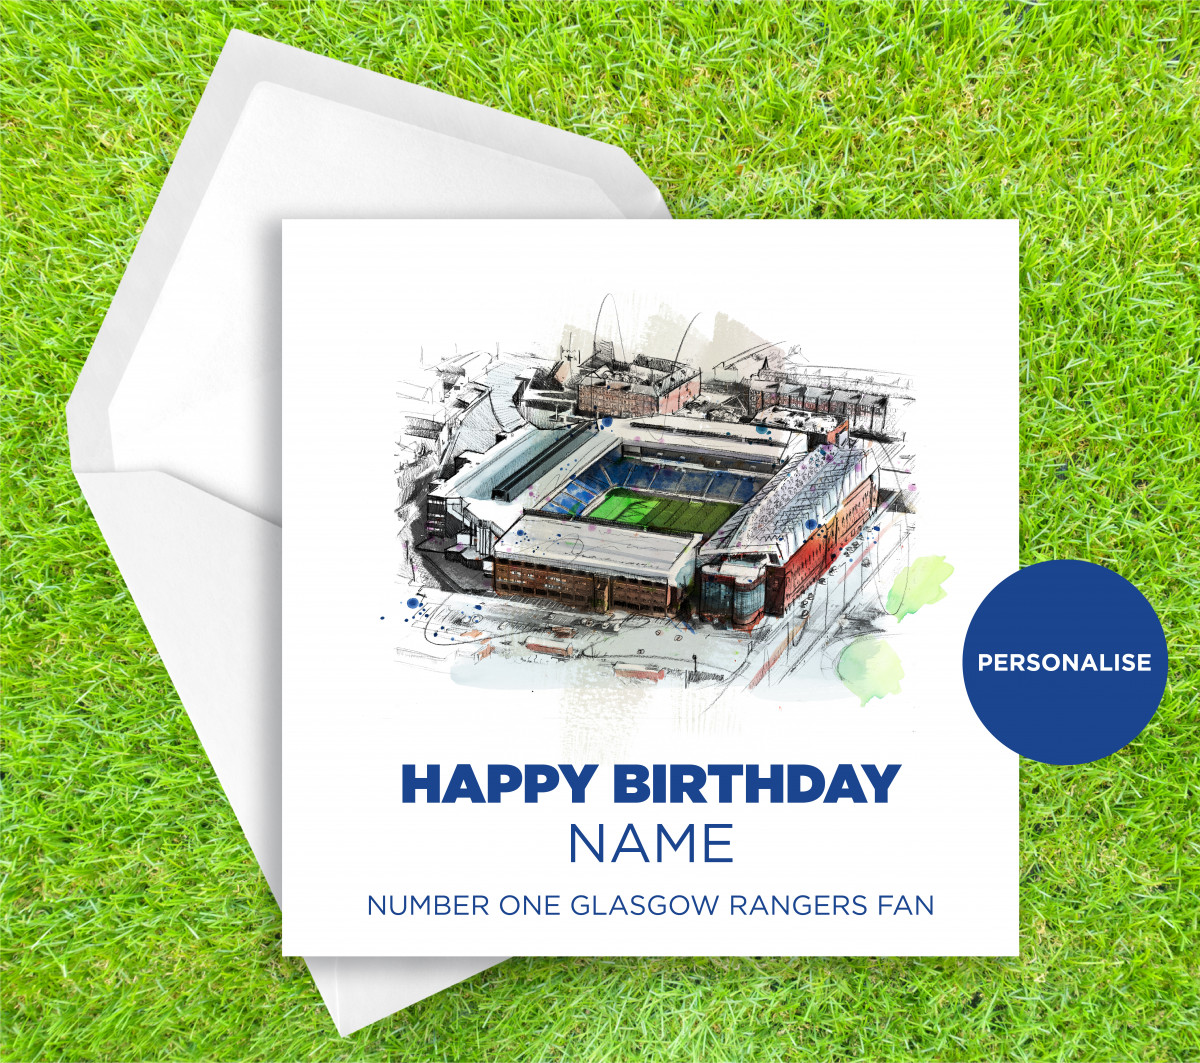 Glasgow Rangers, Ibrox Stadium, personalised birthday card